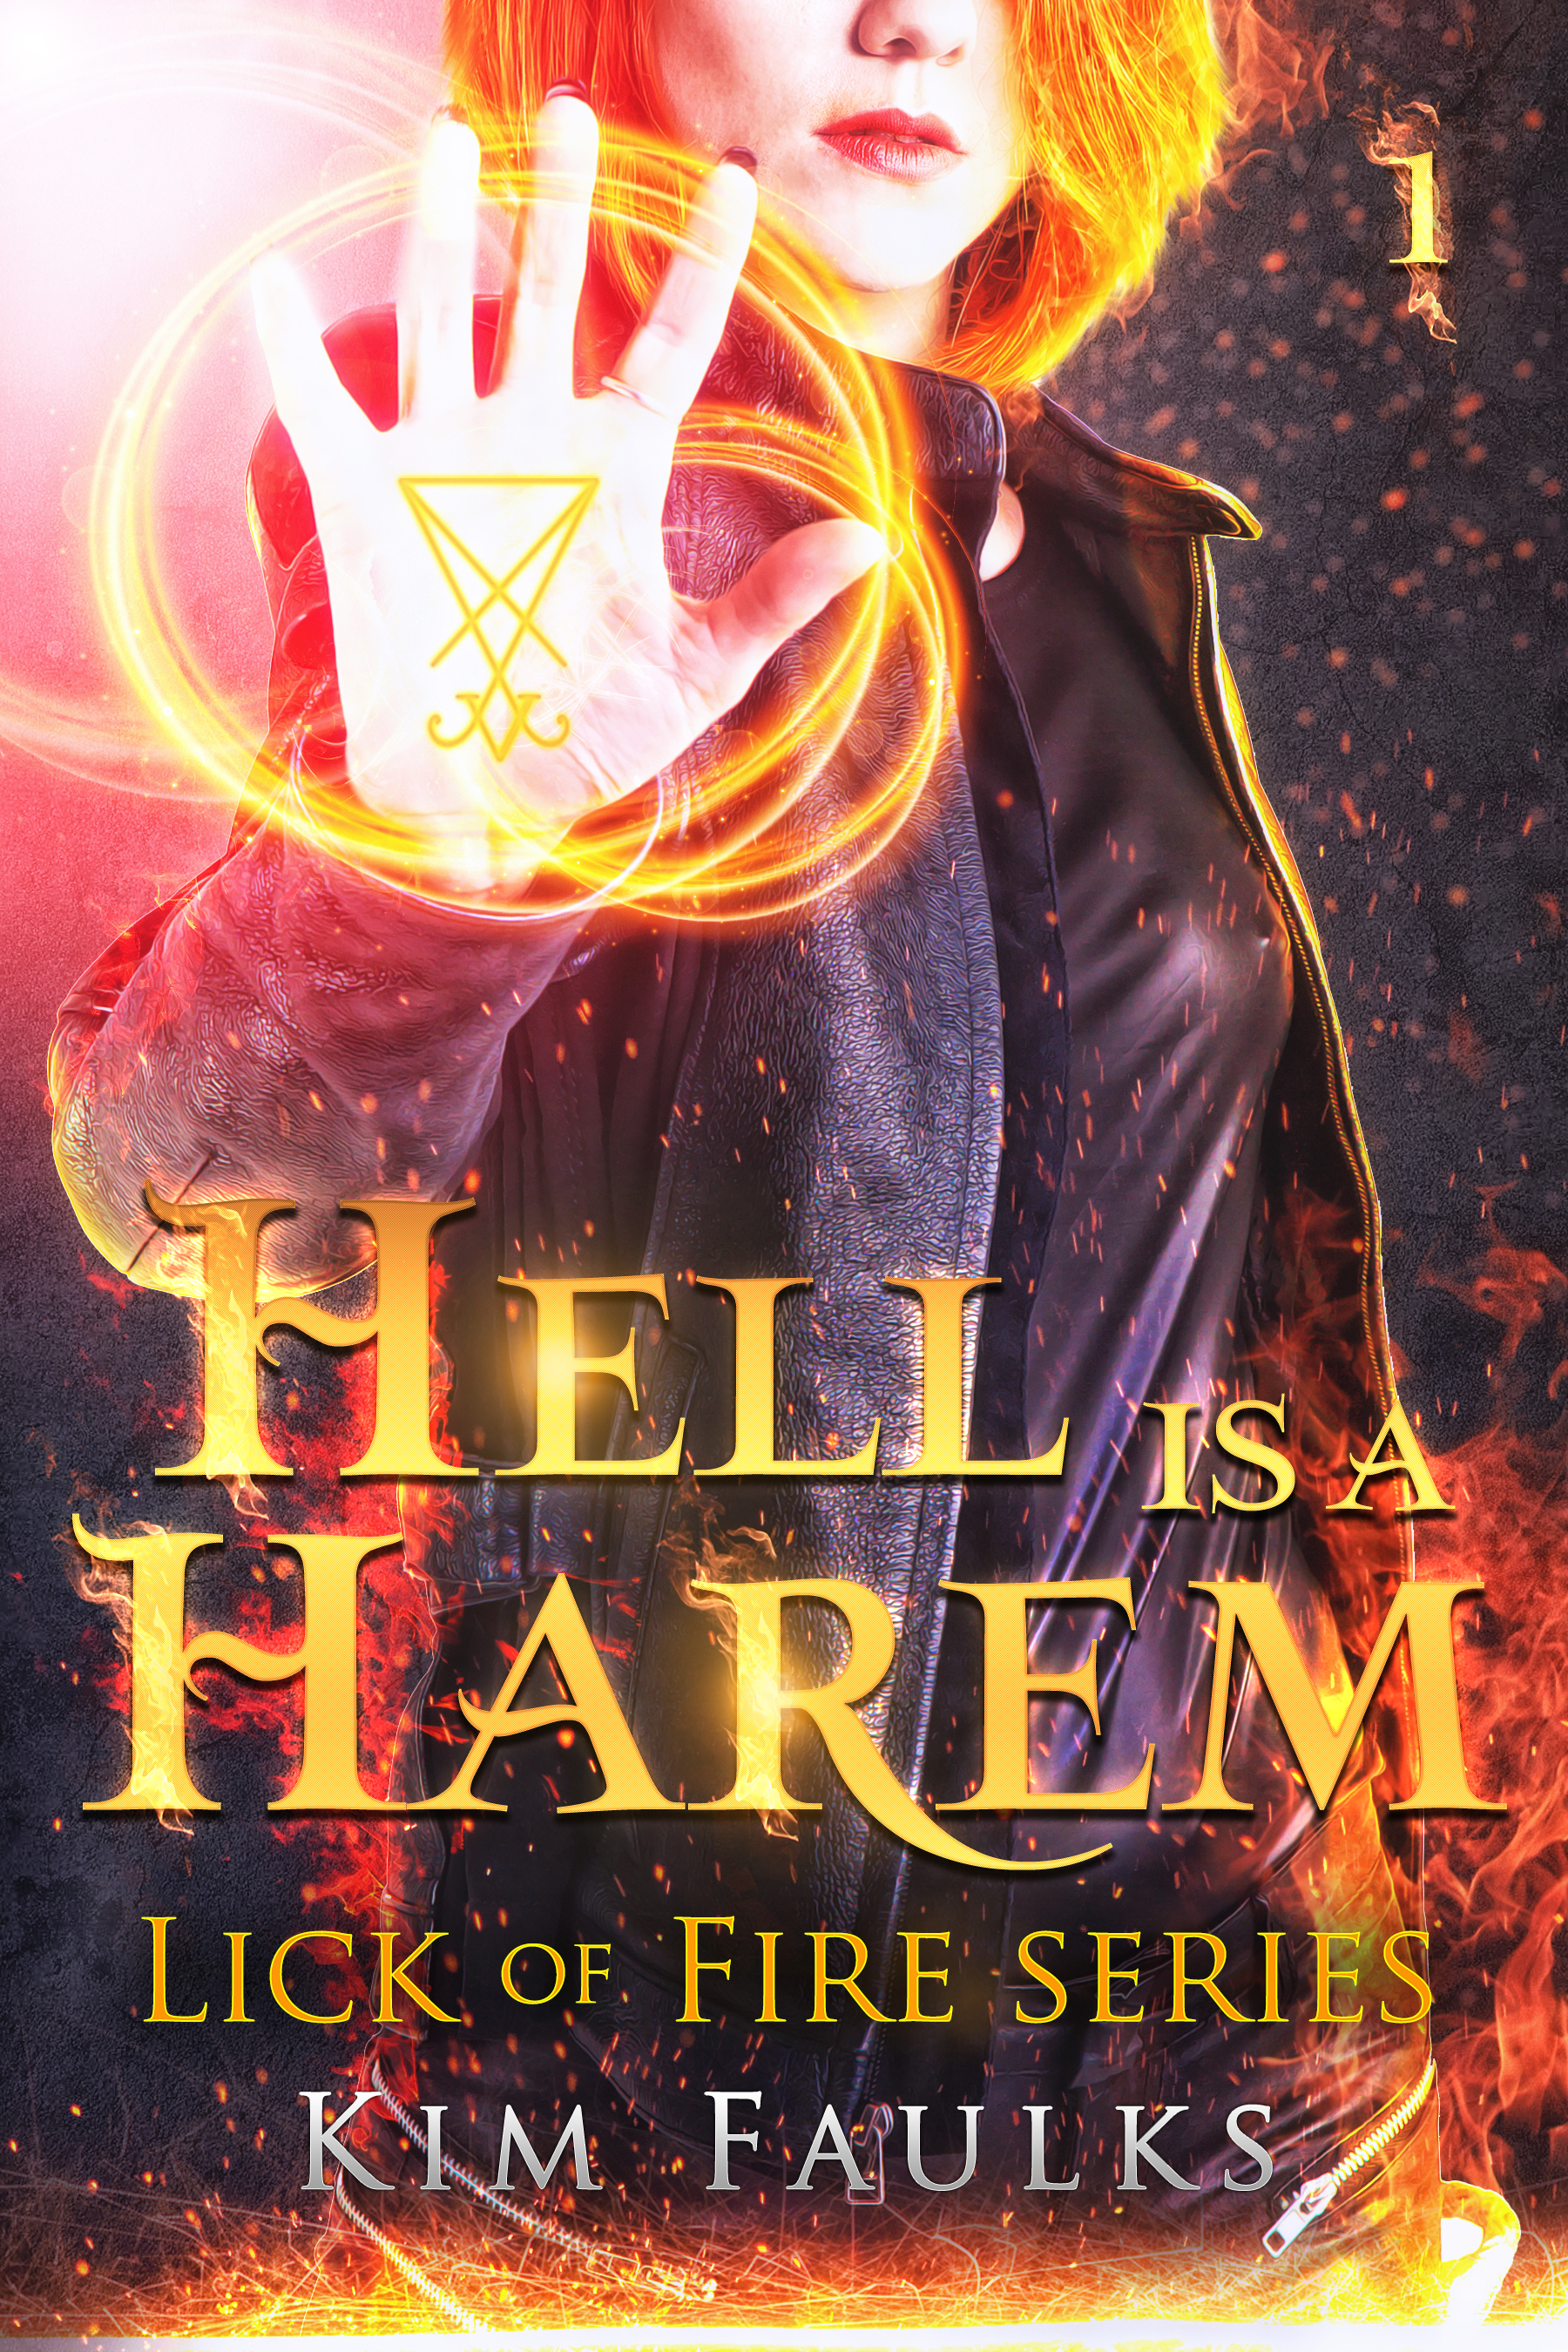 Kim Faulks - Lick of Fire series - Hell is a Harem - 1.jpg